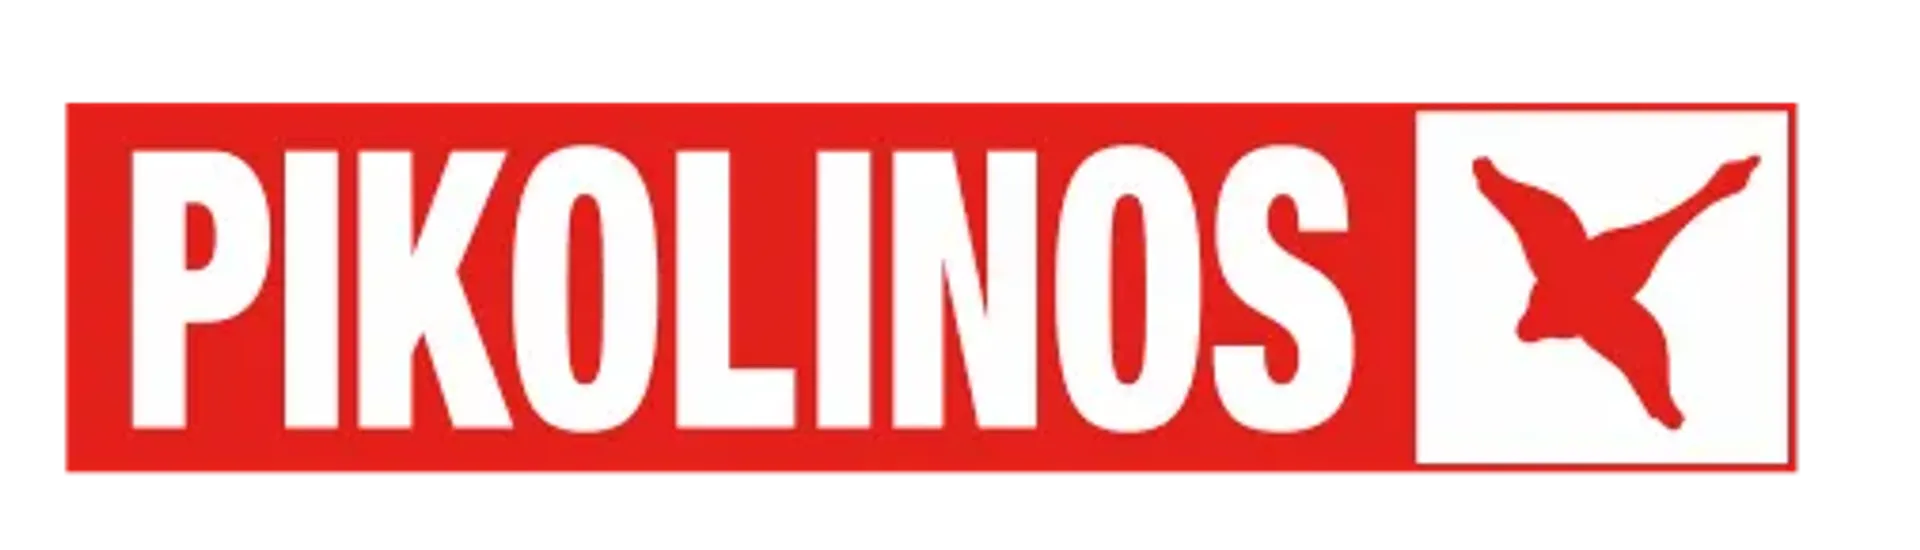 PIKOLINOS logo de catálogo